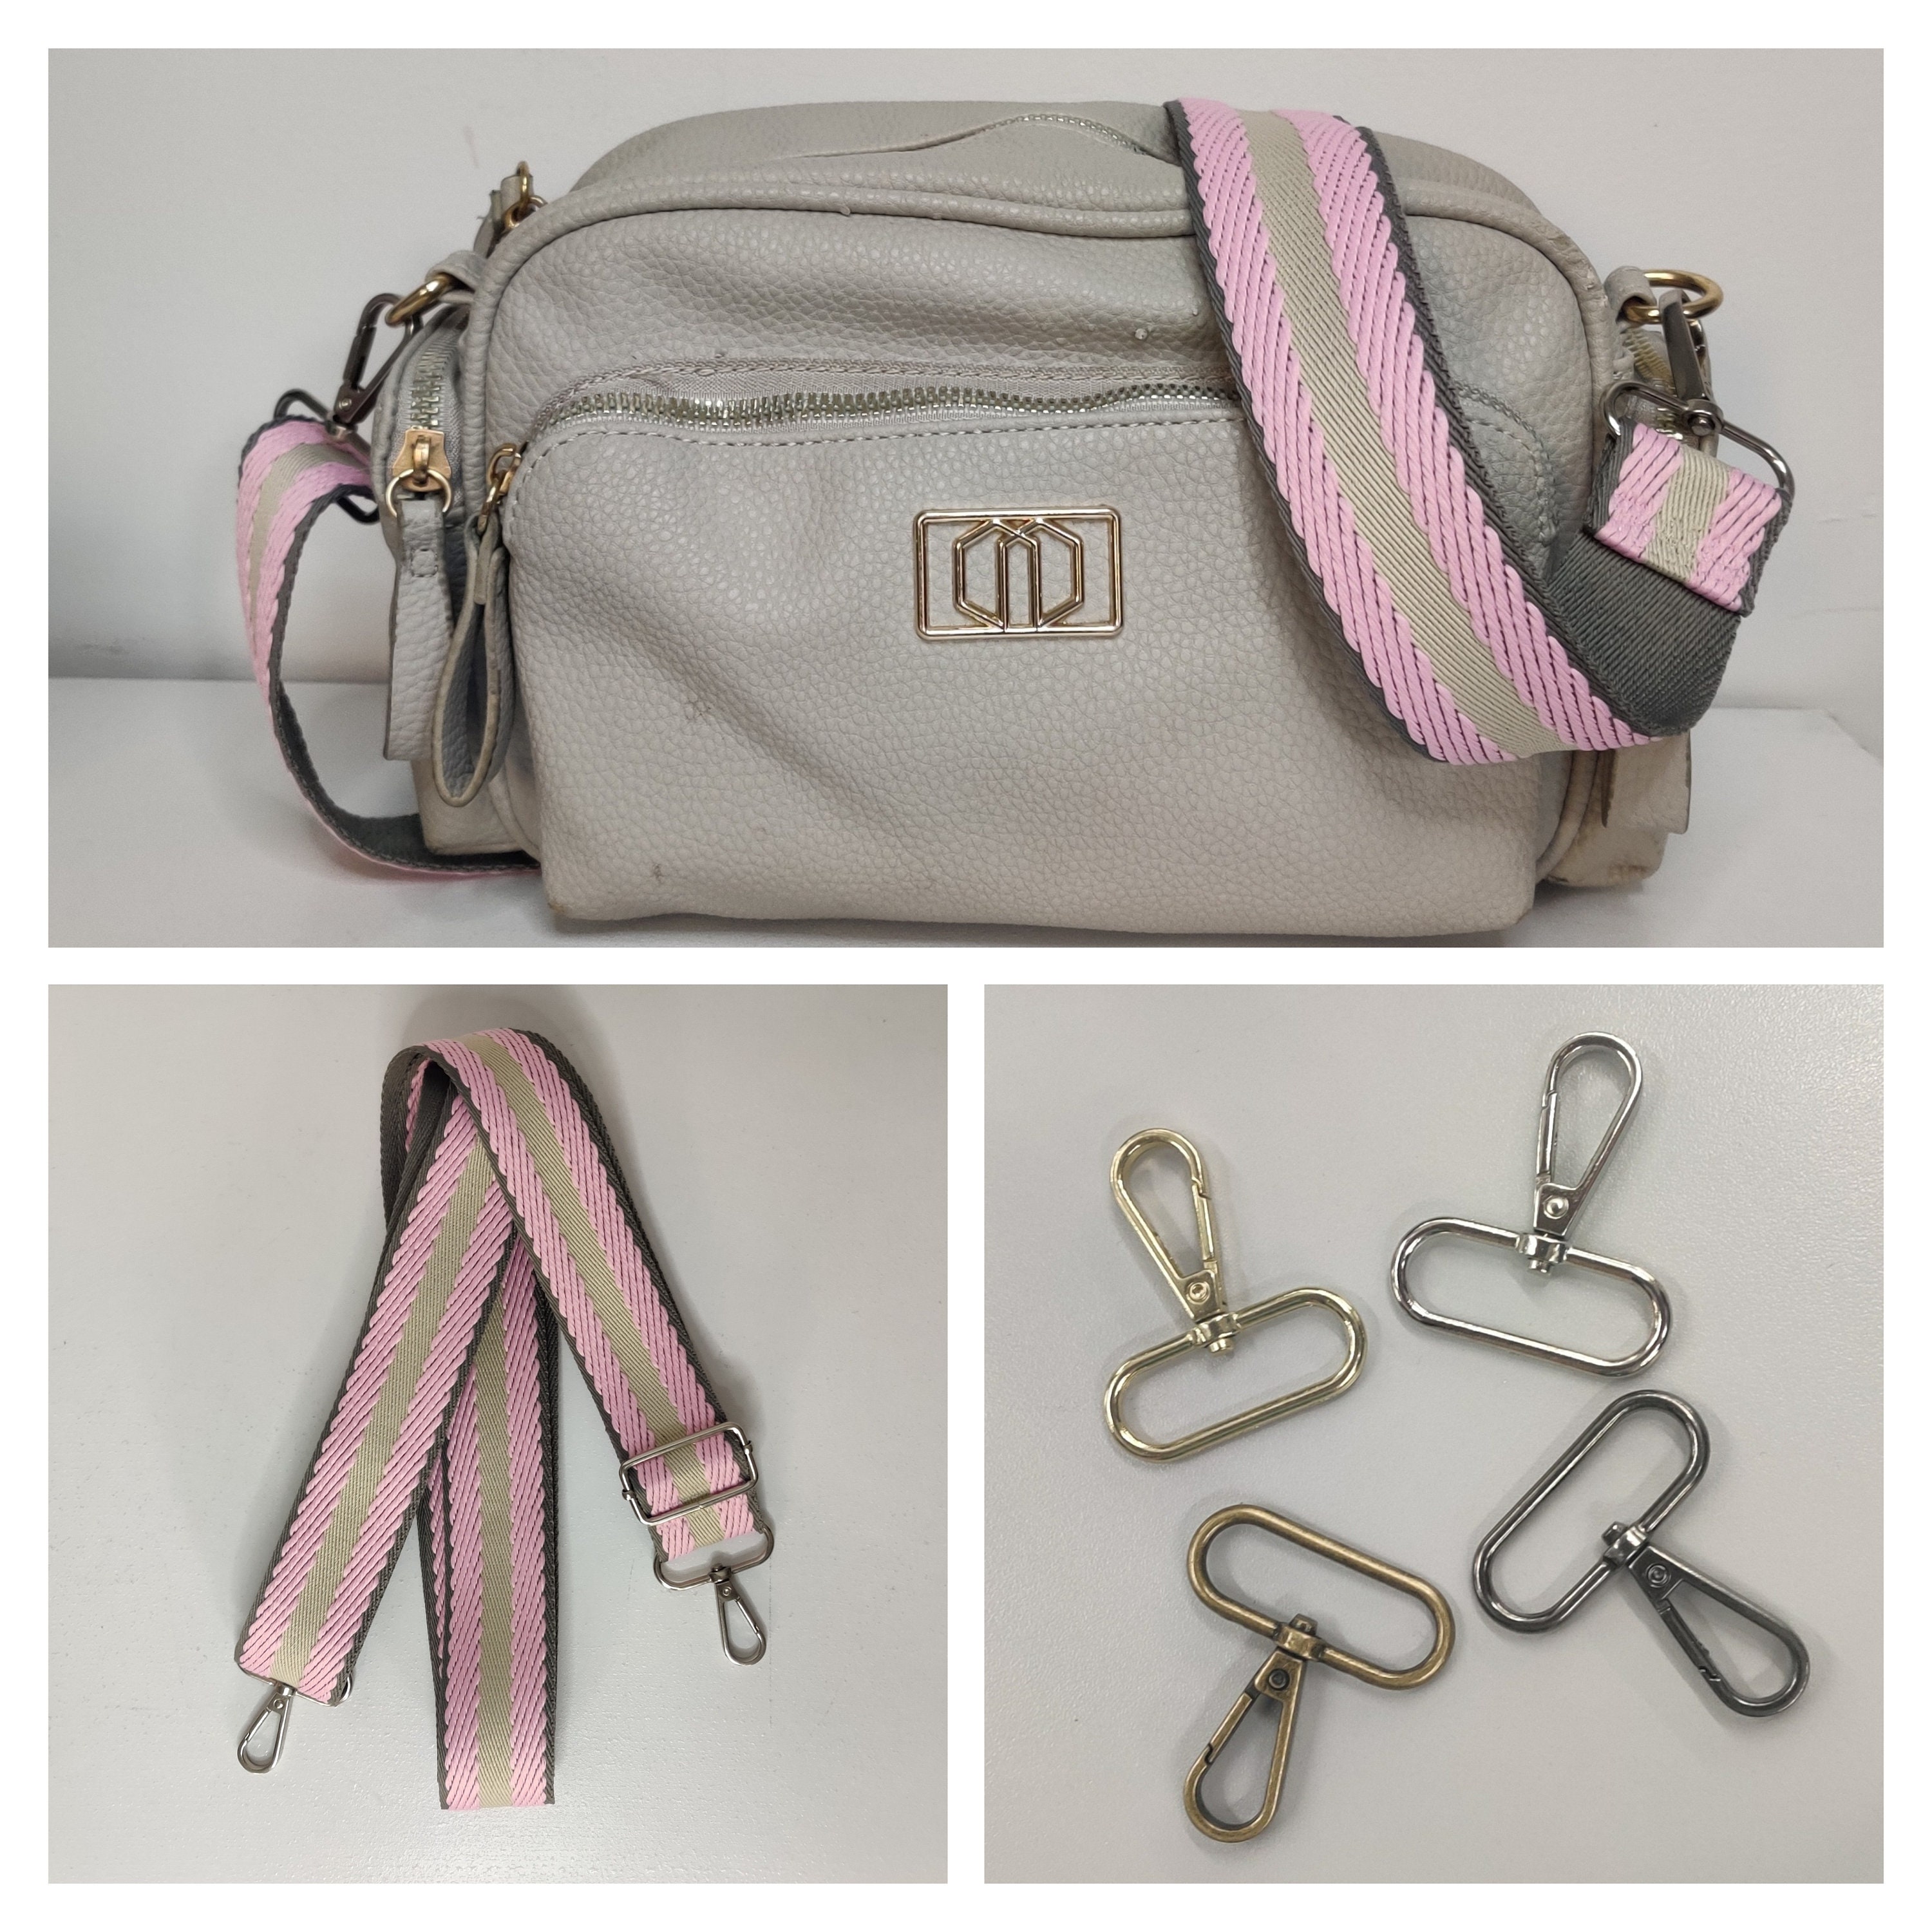 Navy and Pink Bag Strap, Handmade Crossbody Bag Strap, Attachable Shoulder  Bag Straps for Handbags, Replacement Bag Straps, Guitar Strap 